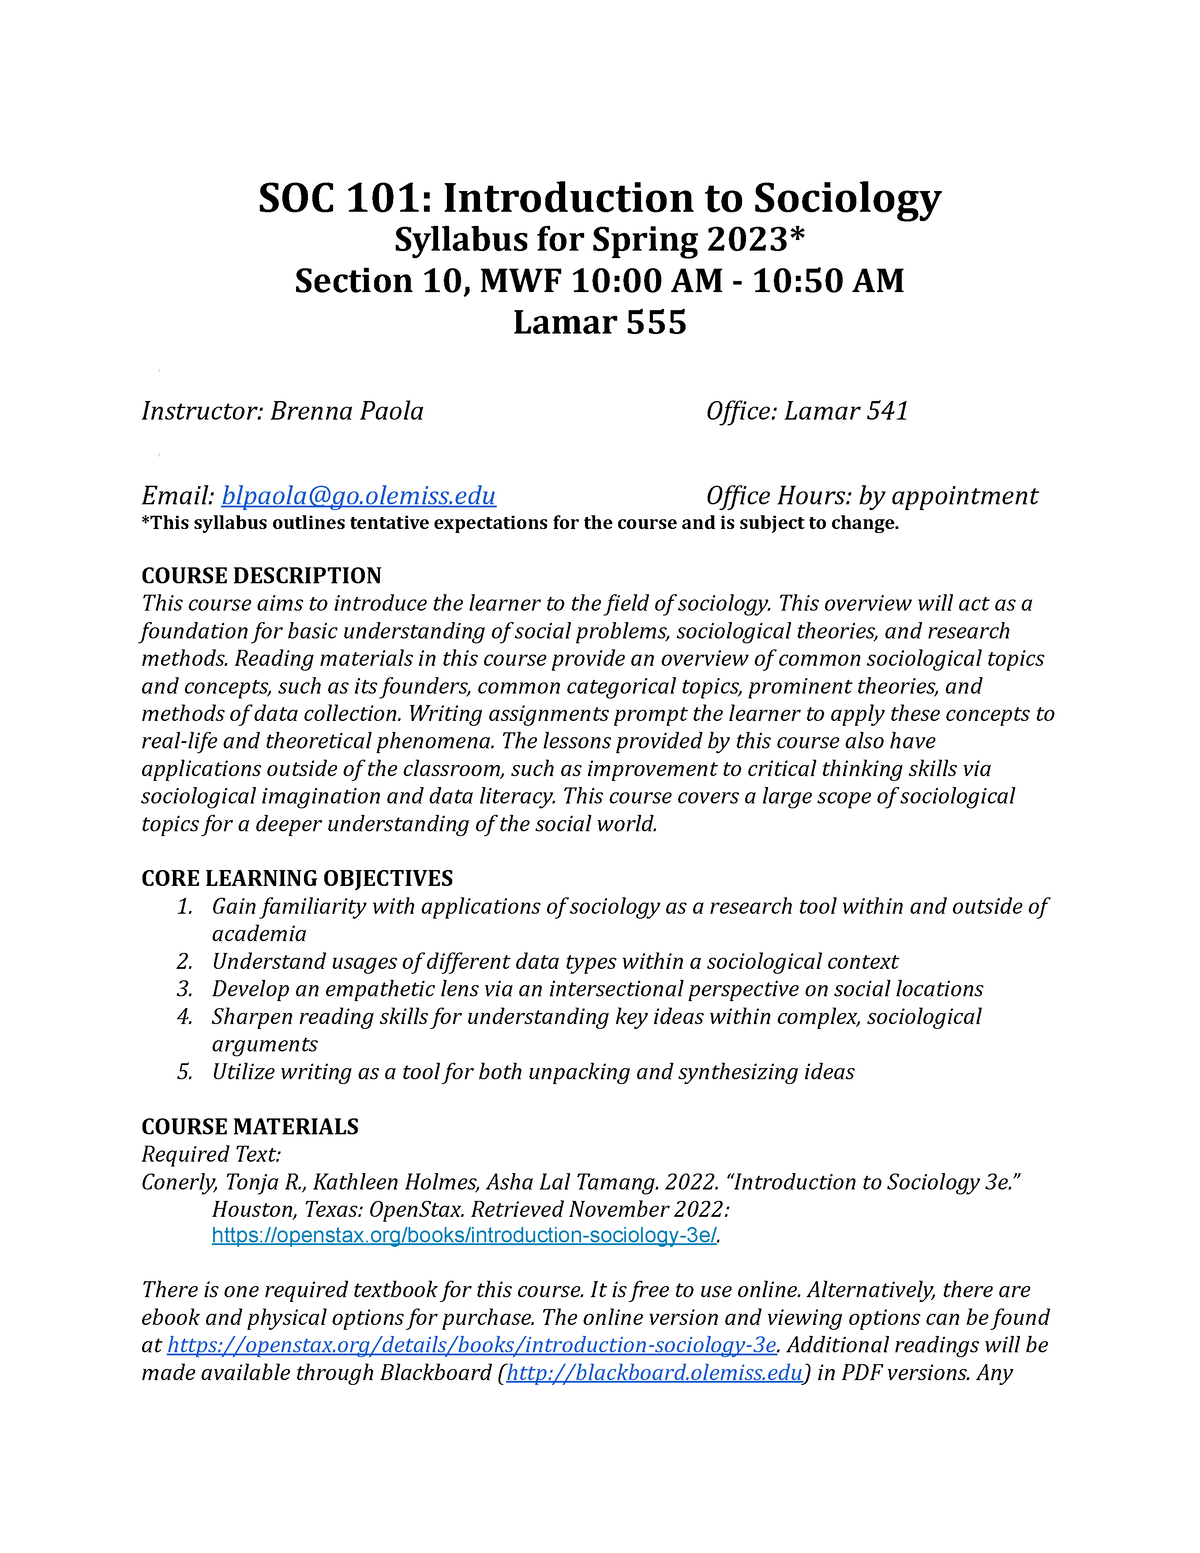 Soc 101 Syllabus Soc 101 Introduction To Sociology Syllabus For Spring 2023 Section 10 Mwf